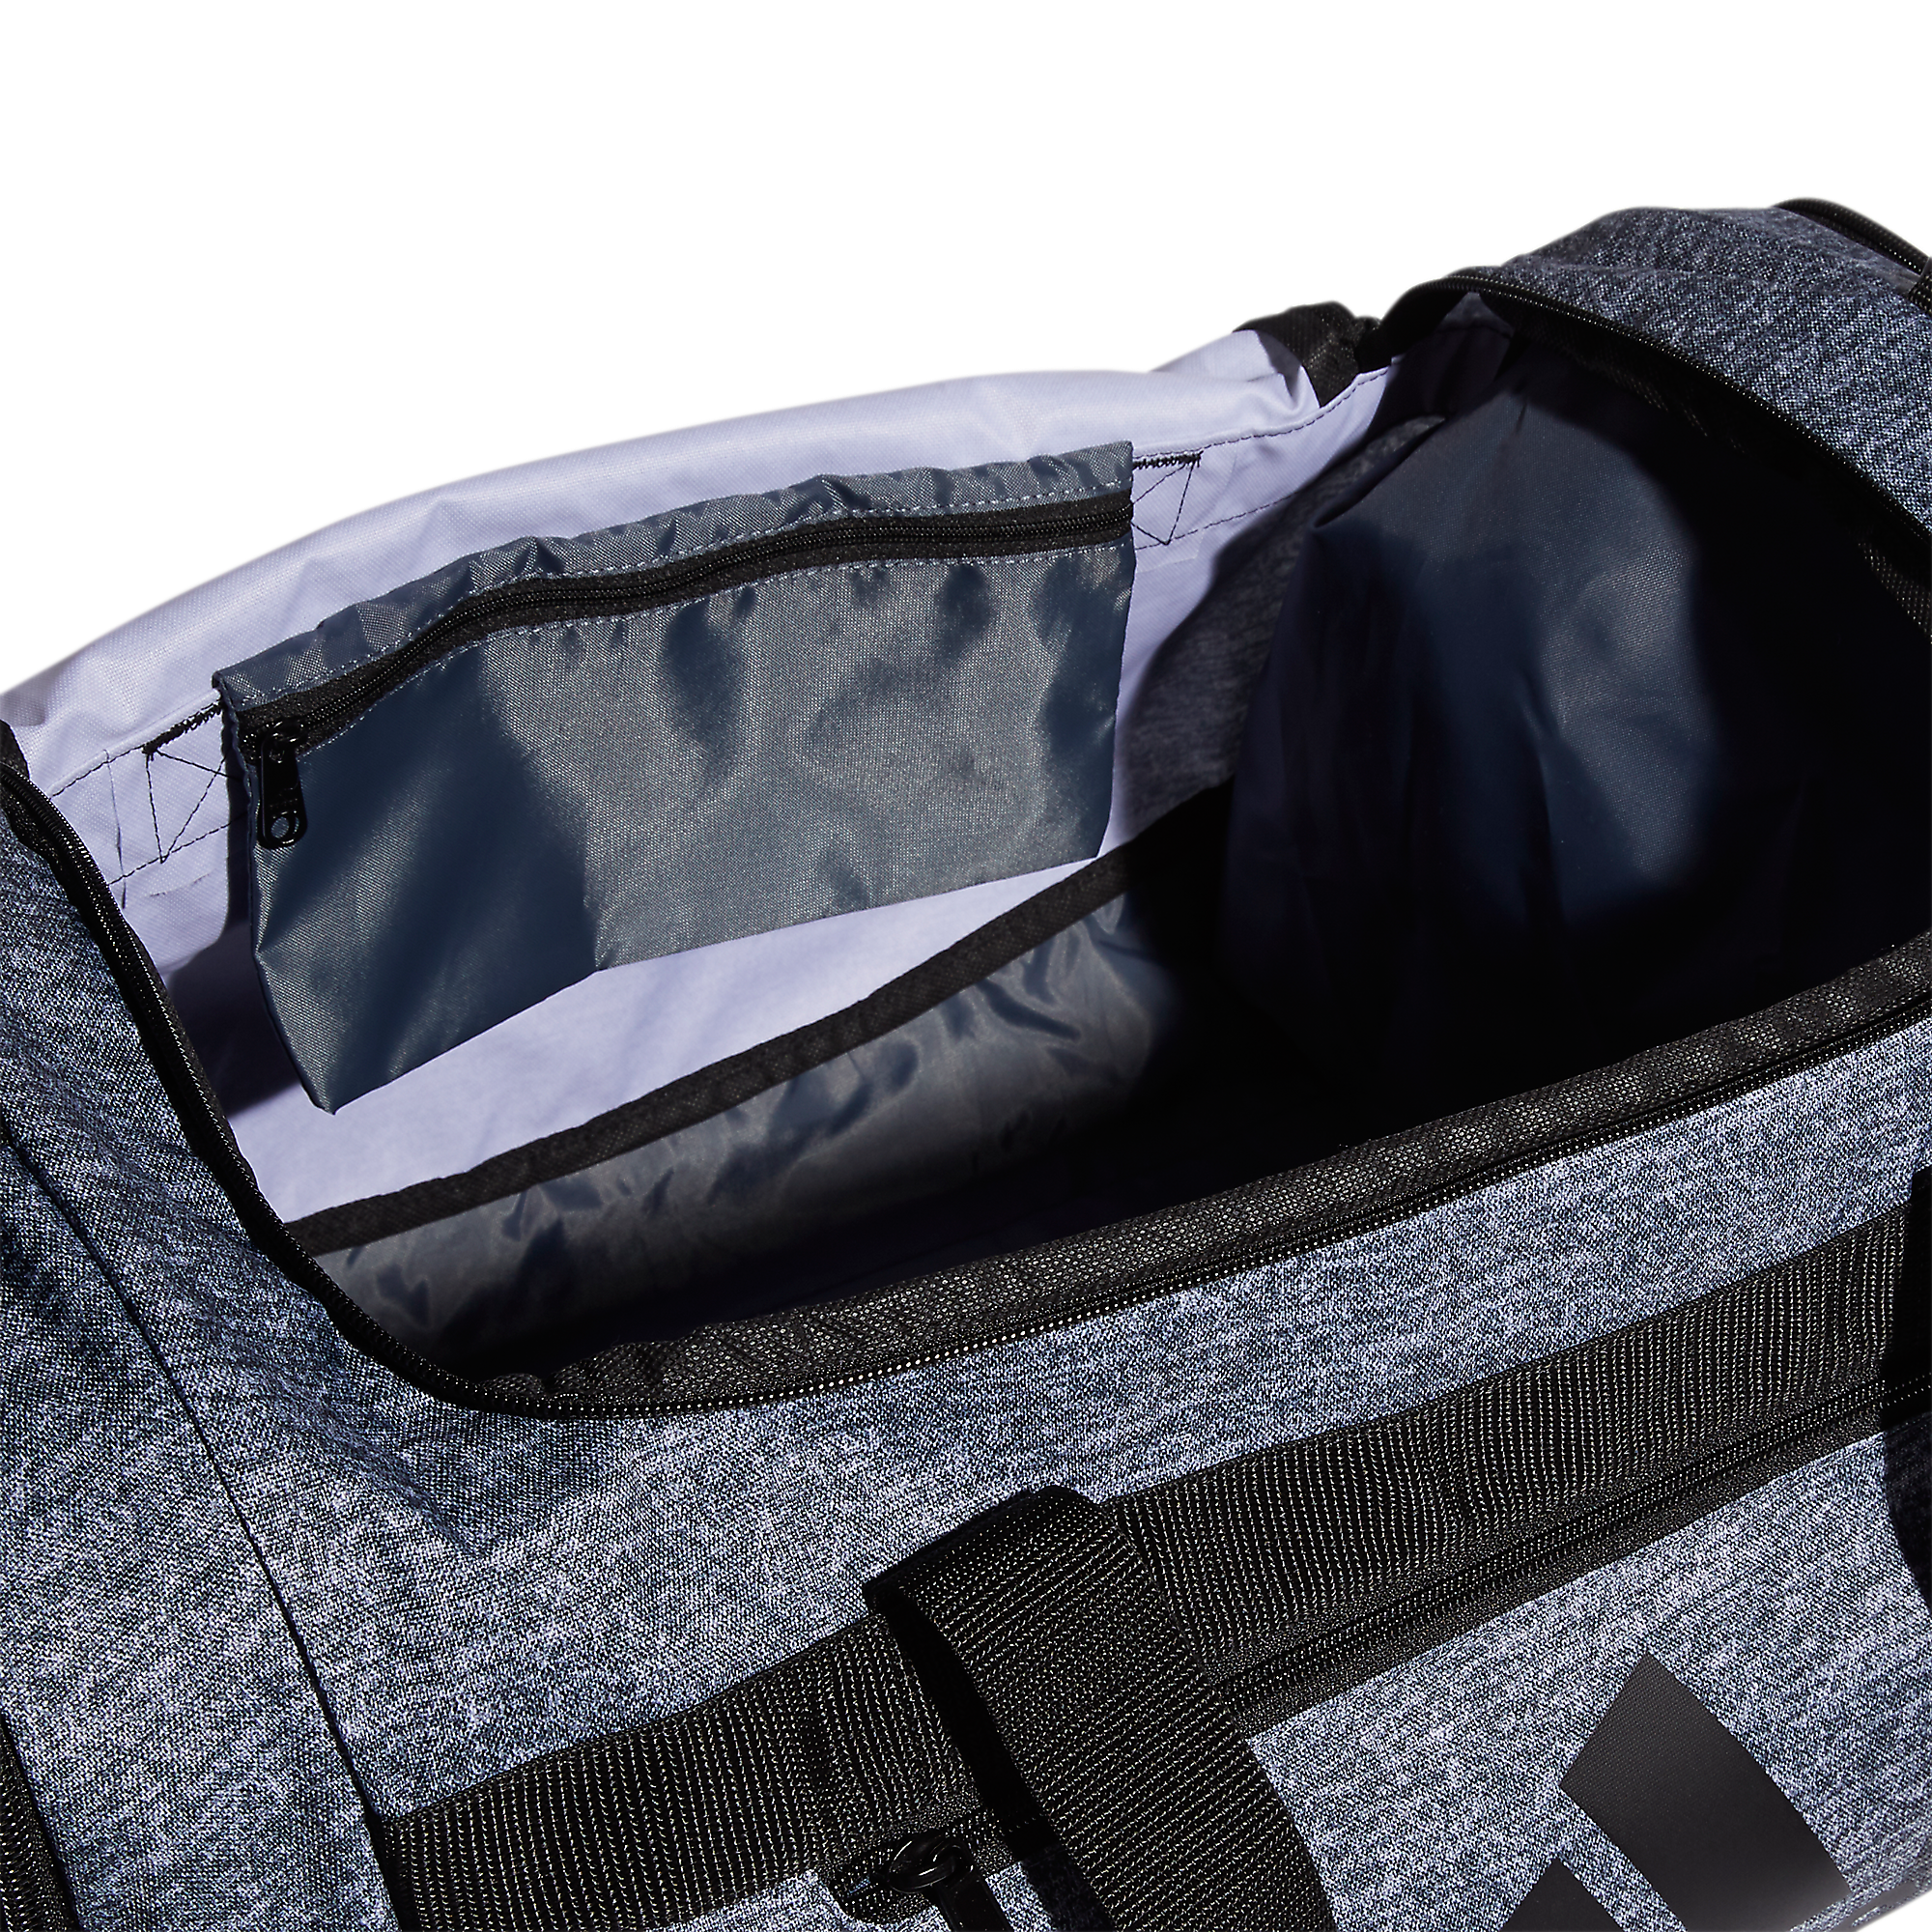 Adidas Defender IV Medium Duffel Bag Navy